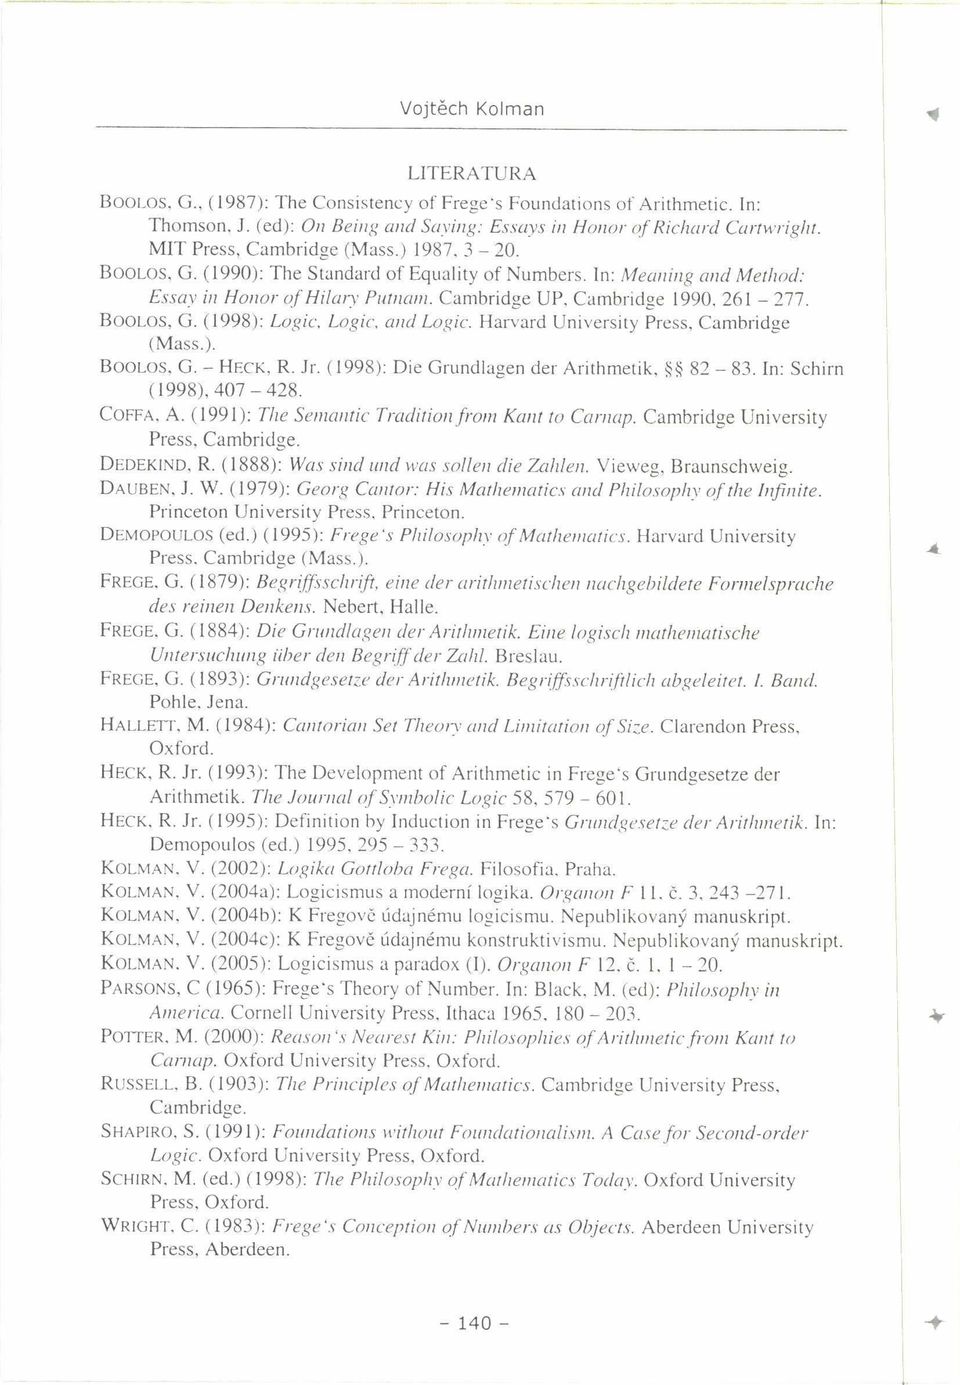 BOOLOS, G. (1998): Logic, Logic, and Logic. Harvard University Press, Cambridge (Mass.). BOOLOS, G. - HECK, R. Jr. (1998): Die Grundlagen der Arithmetik, 82-83. In: Schirn (1998), 407-428. COFFA, A.